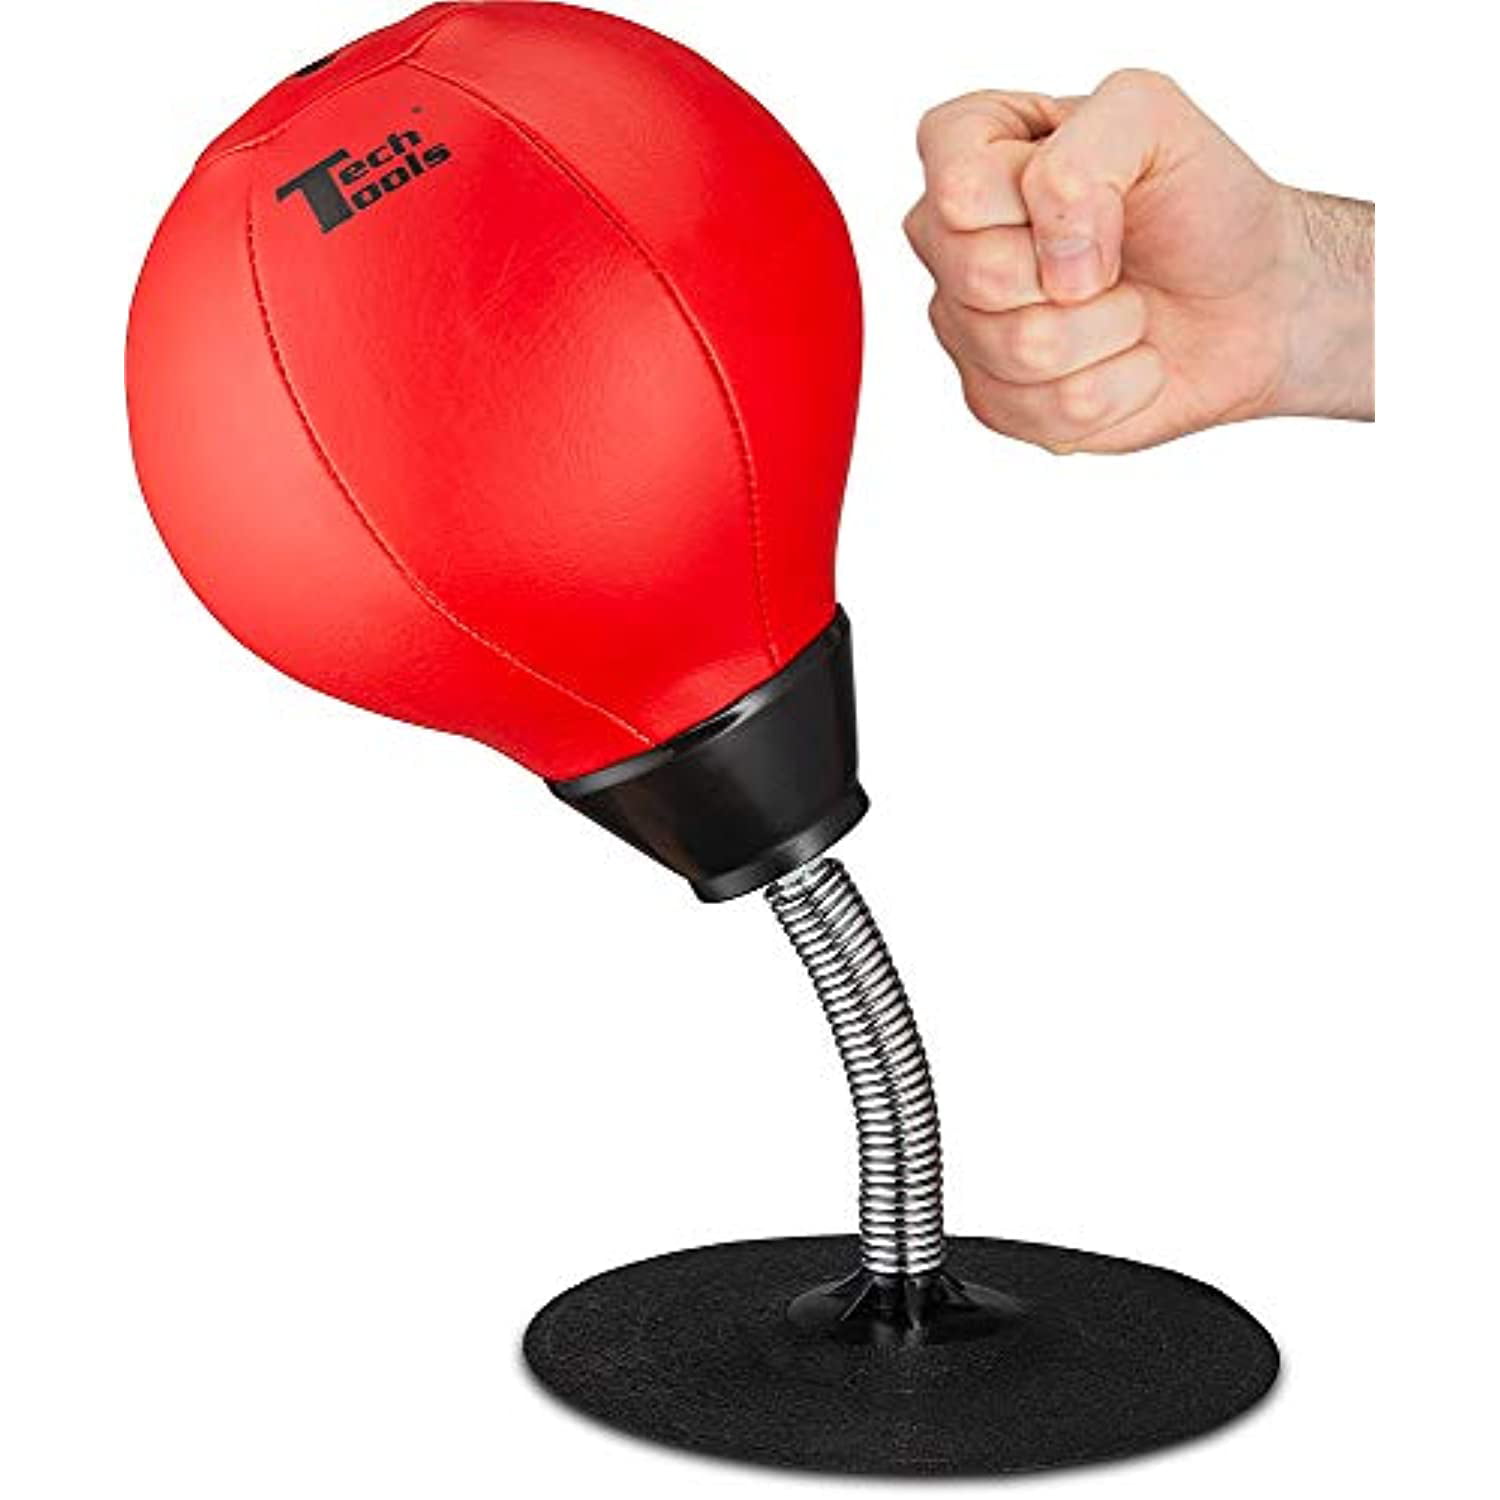 Axe Black Red Decorative Desktop Punching Bag with Air Pump fun Stress Hammer 